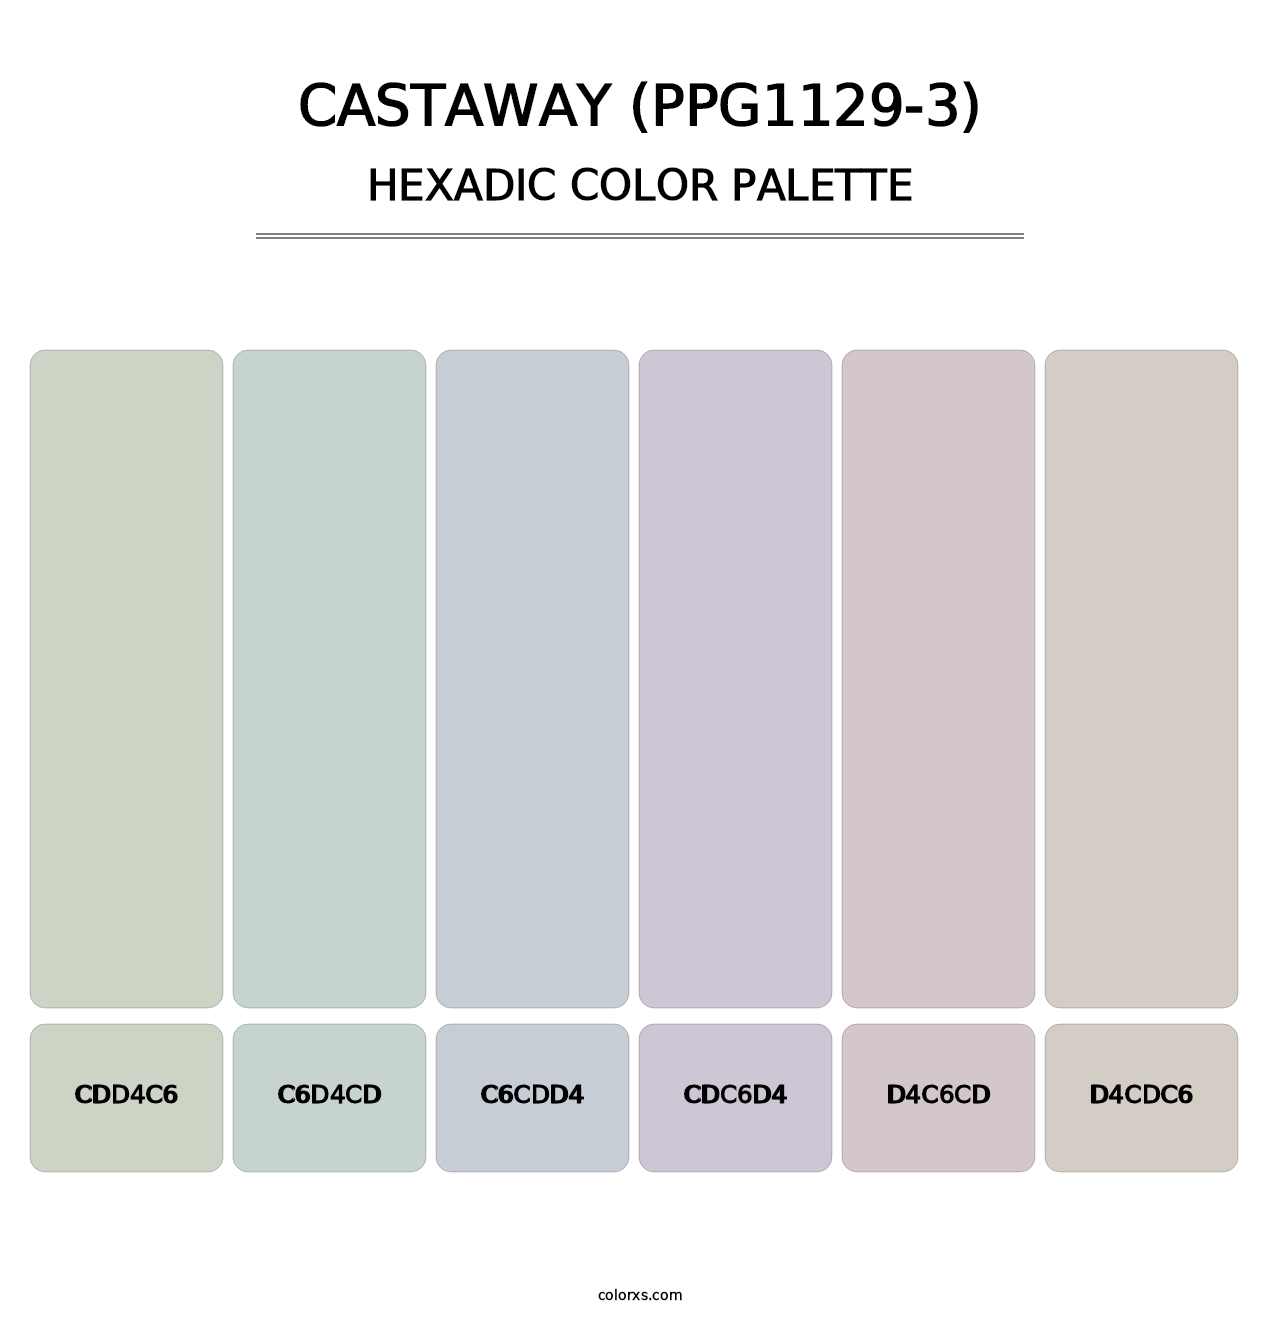 Castaway (PPG1129-3) - Hexadic Color Palette